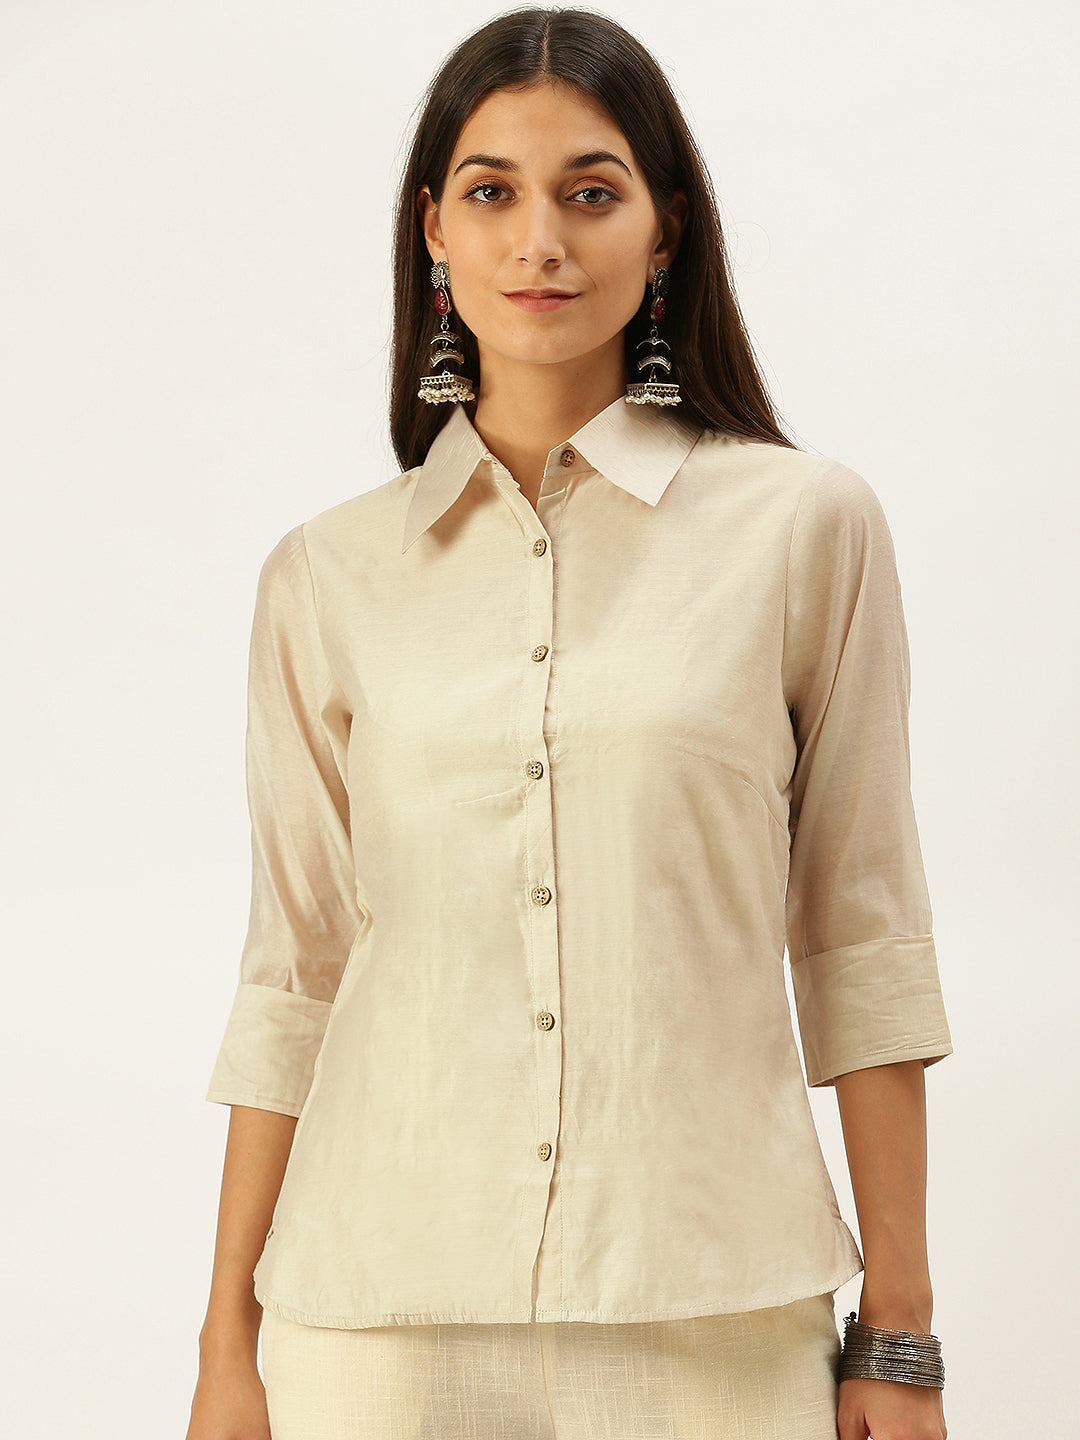 Vedic Gold-Toned  Gold-Toned Floral Printed Shirt Collar Chanderi Cotton Kurti